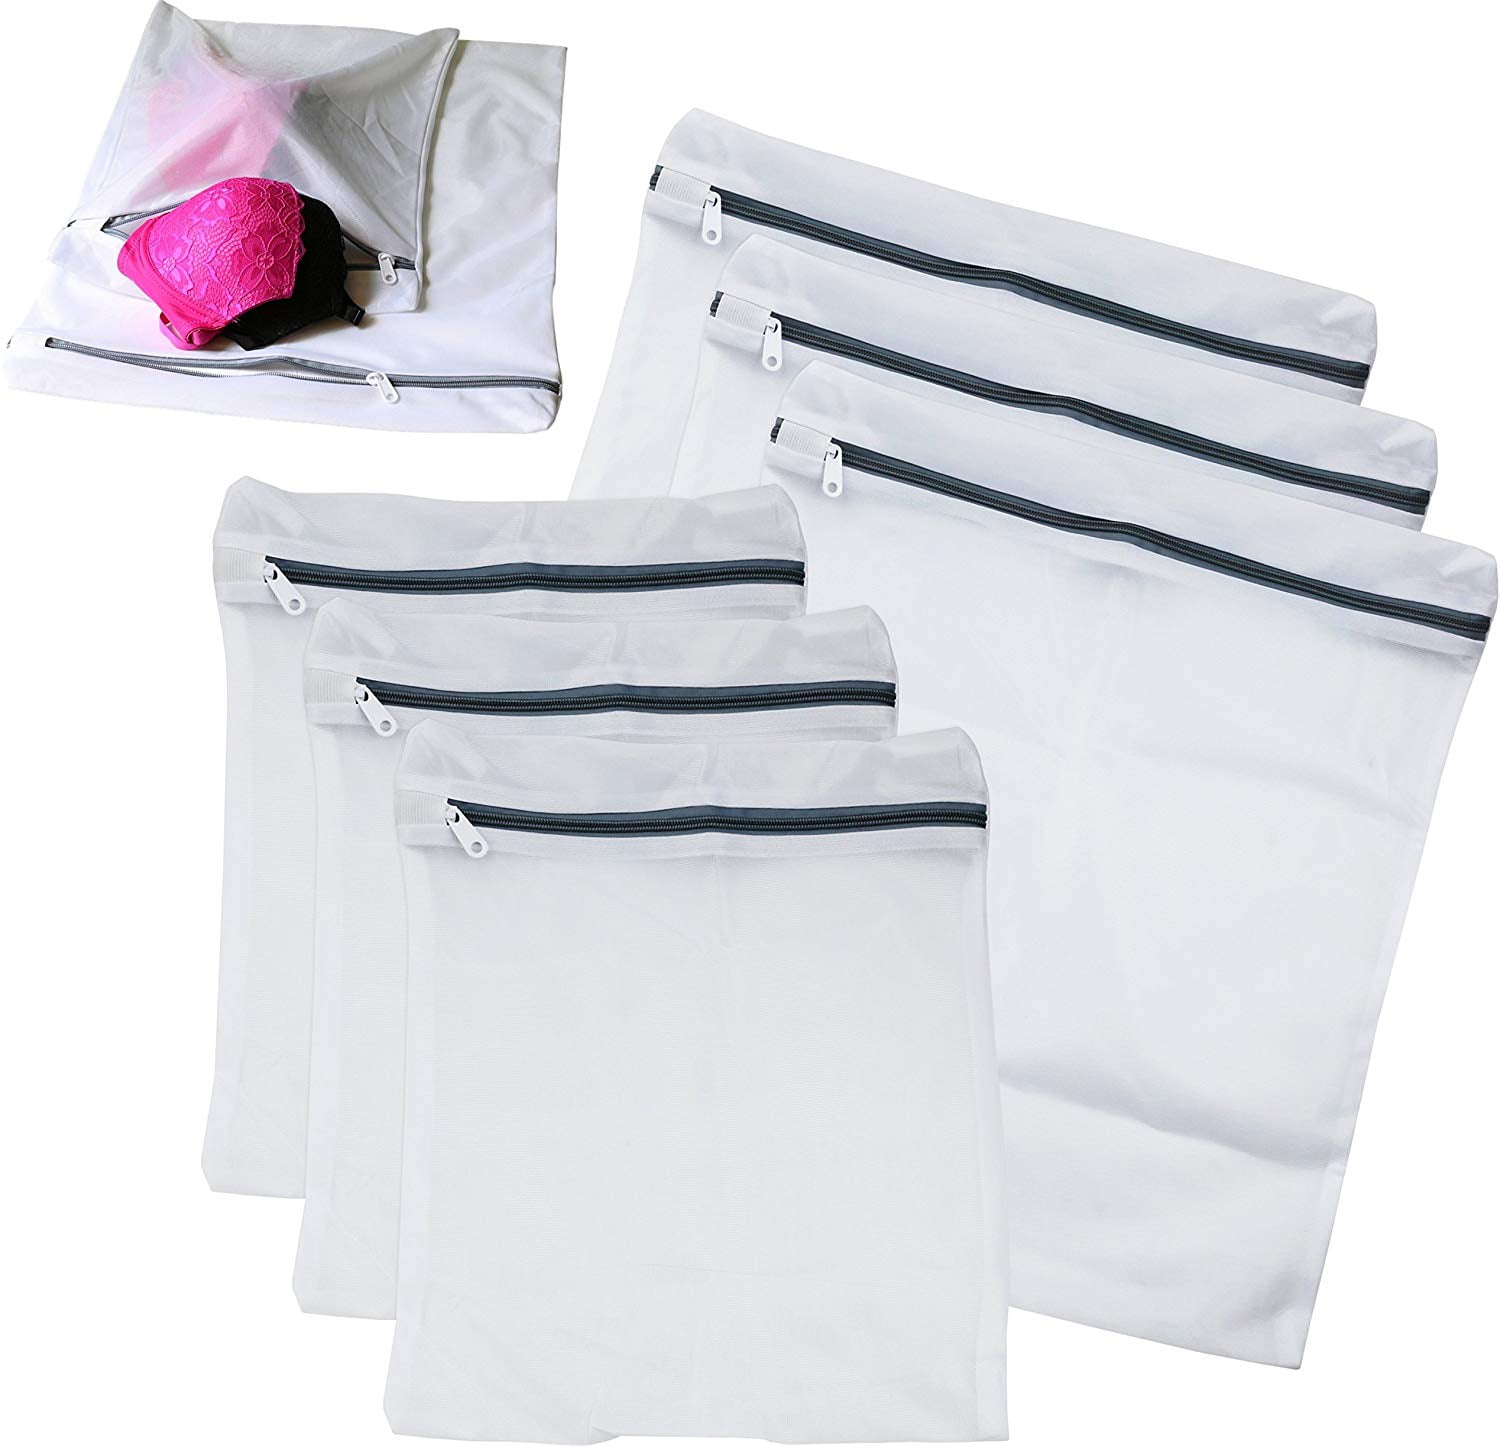 6 Pack 3 Large & 3 Medium SimpleHouseware Laundry Bra Lingerie Mesh Wash Bag